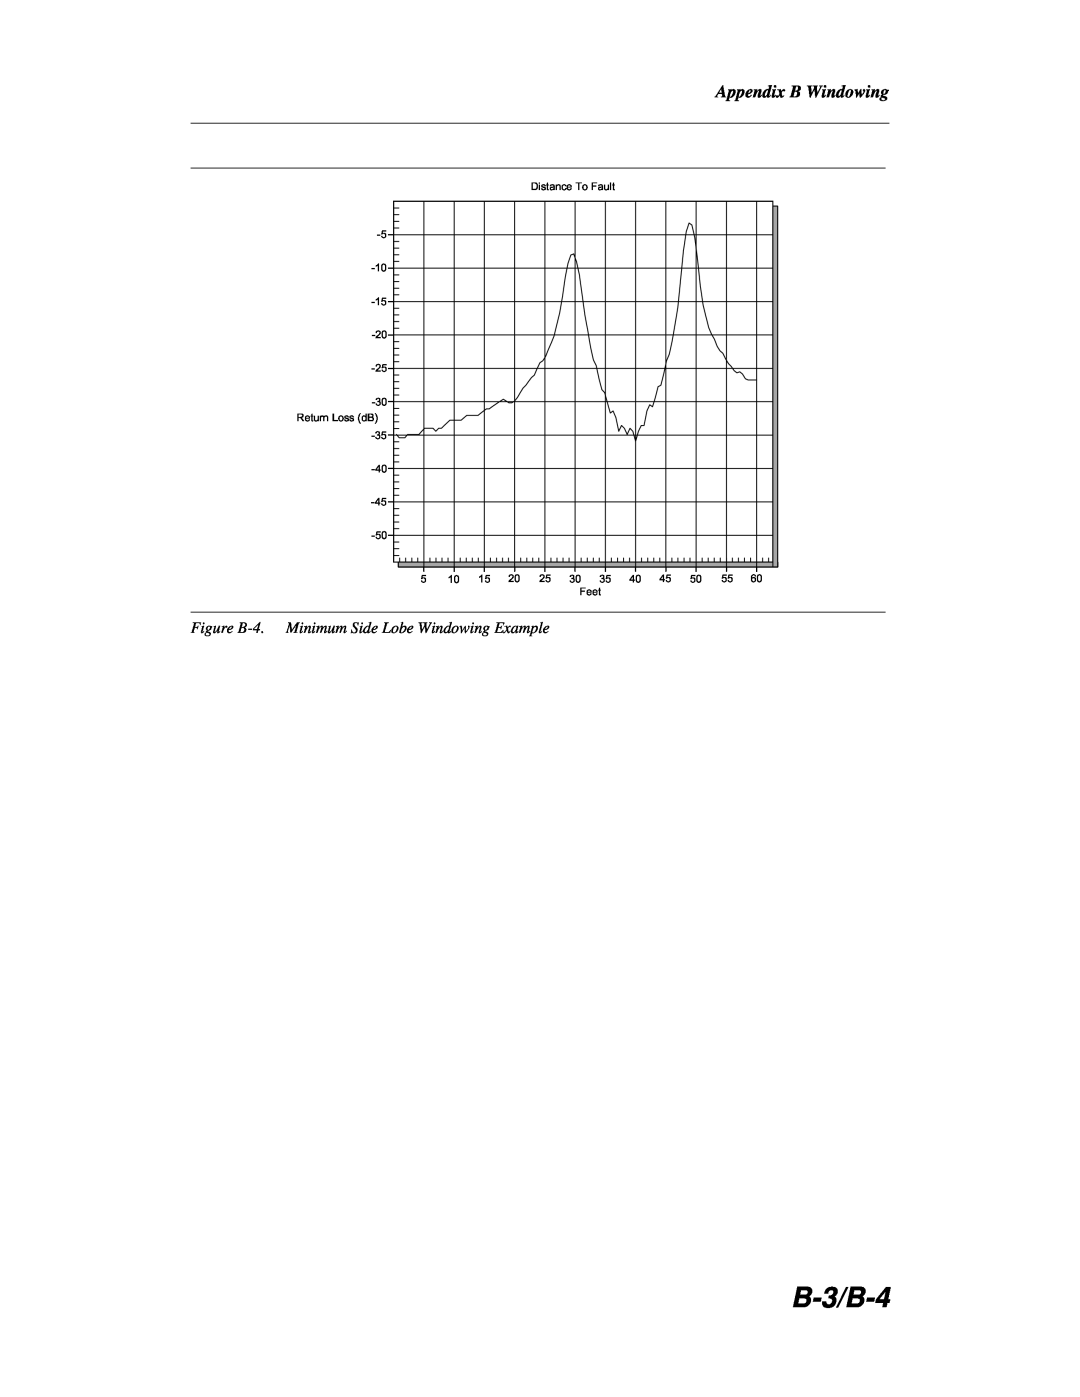 Anritsu S251C manual B-3/B-4, Appendix B Windowing, Figure B-4.Minimum Side Lobe Windowing Example 